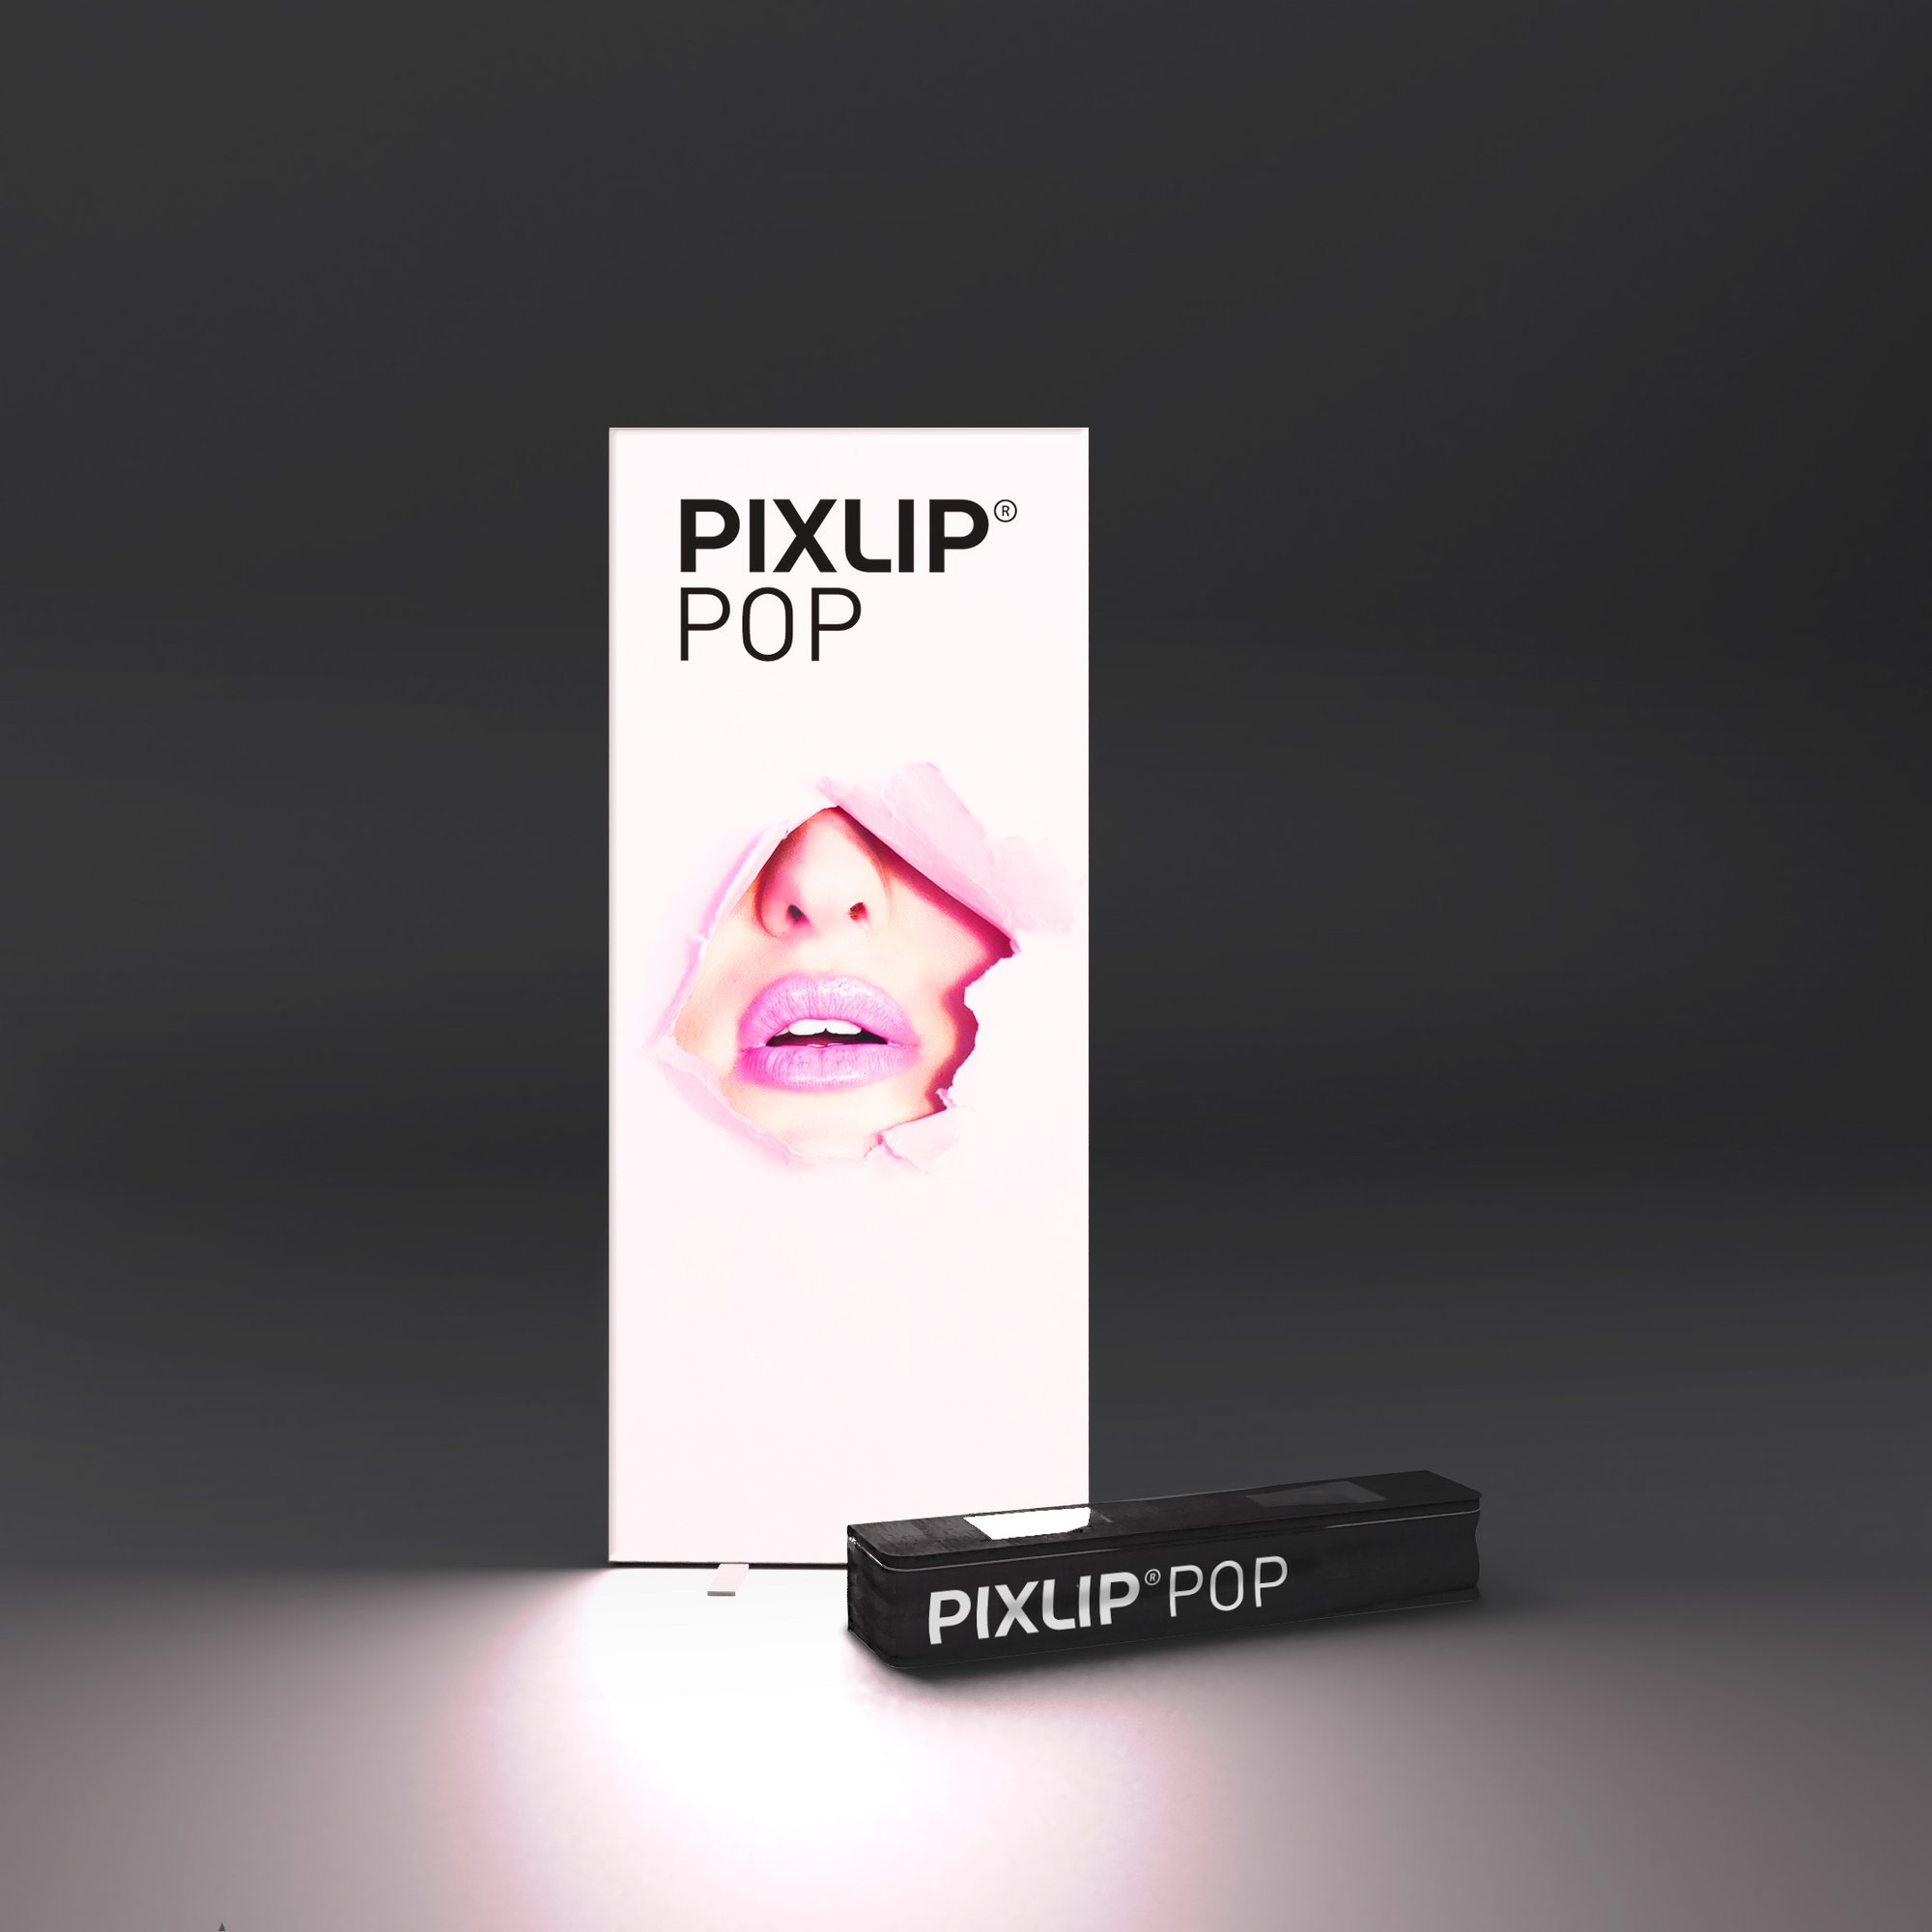 Pixlip POP measuring system